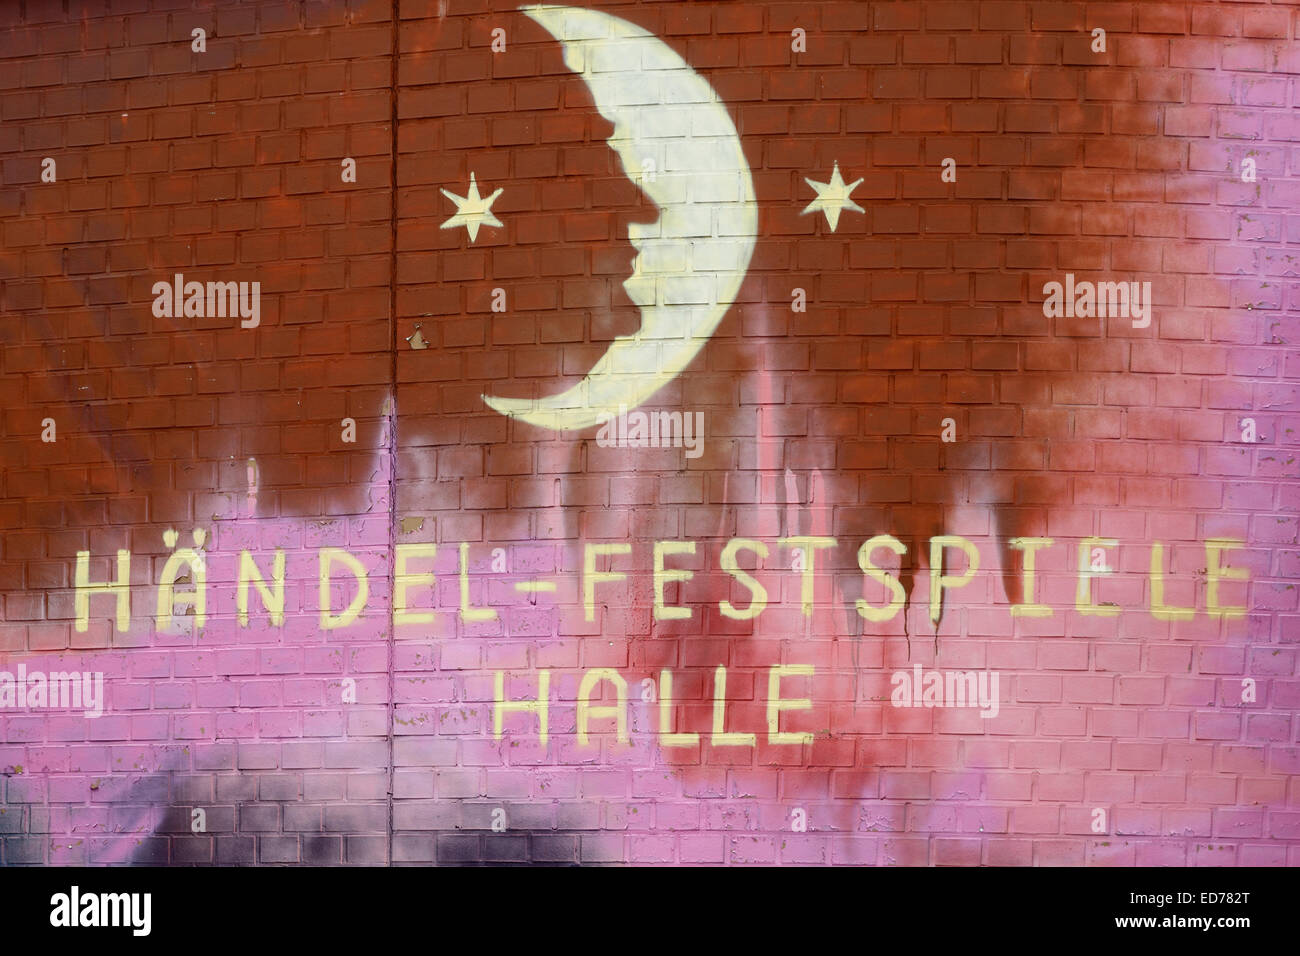 Händel-Festspiele Halle (Saale) - Graffiti Foto de stock